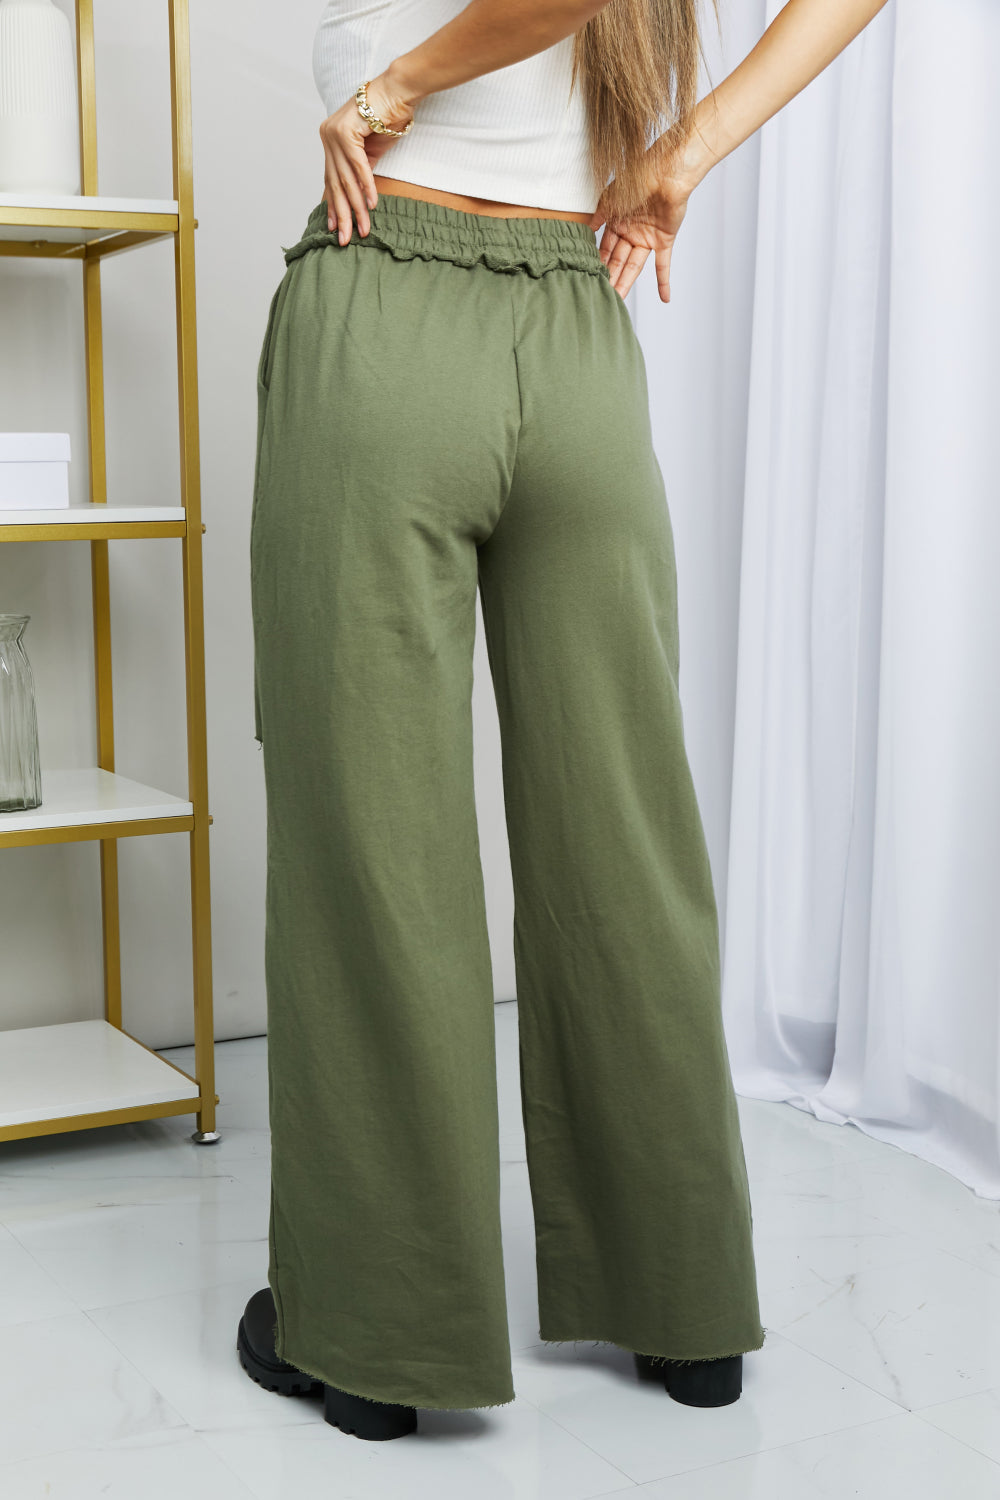 Zenana Full Size Drawstring Waist Distressed Wide Leg Pants in LT Olive | Pants - CHANELIA